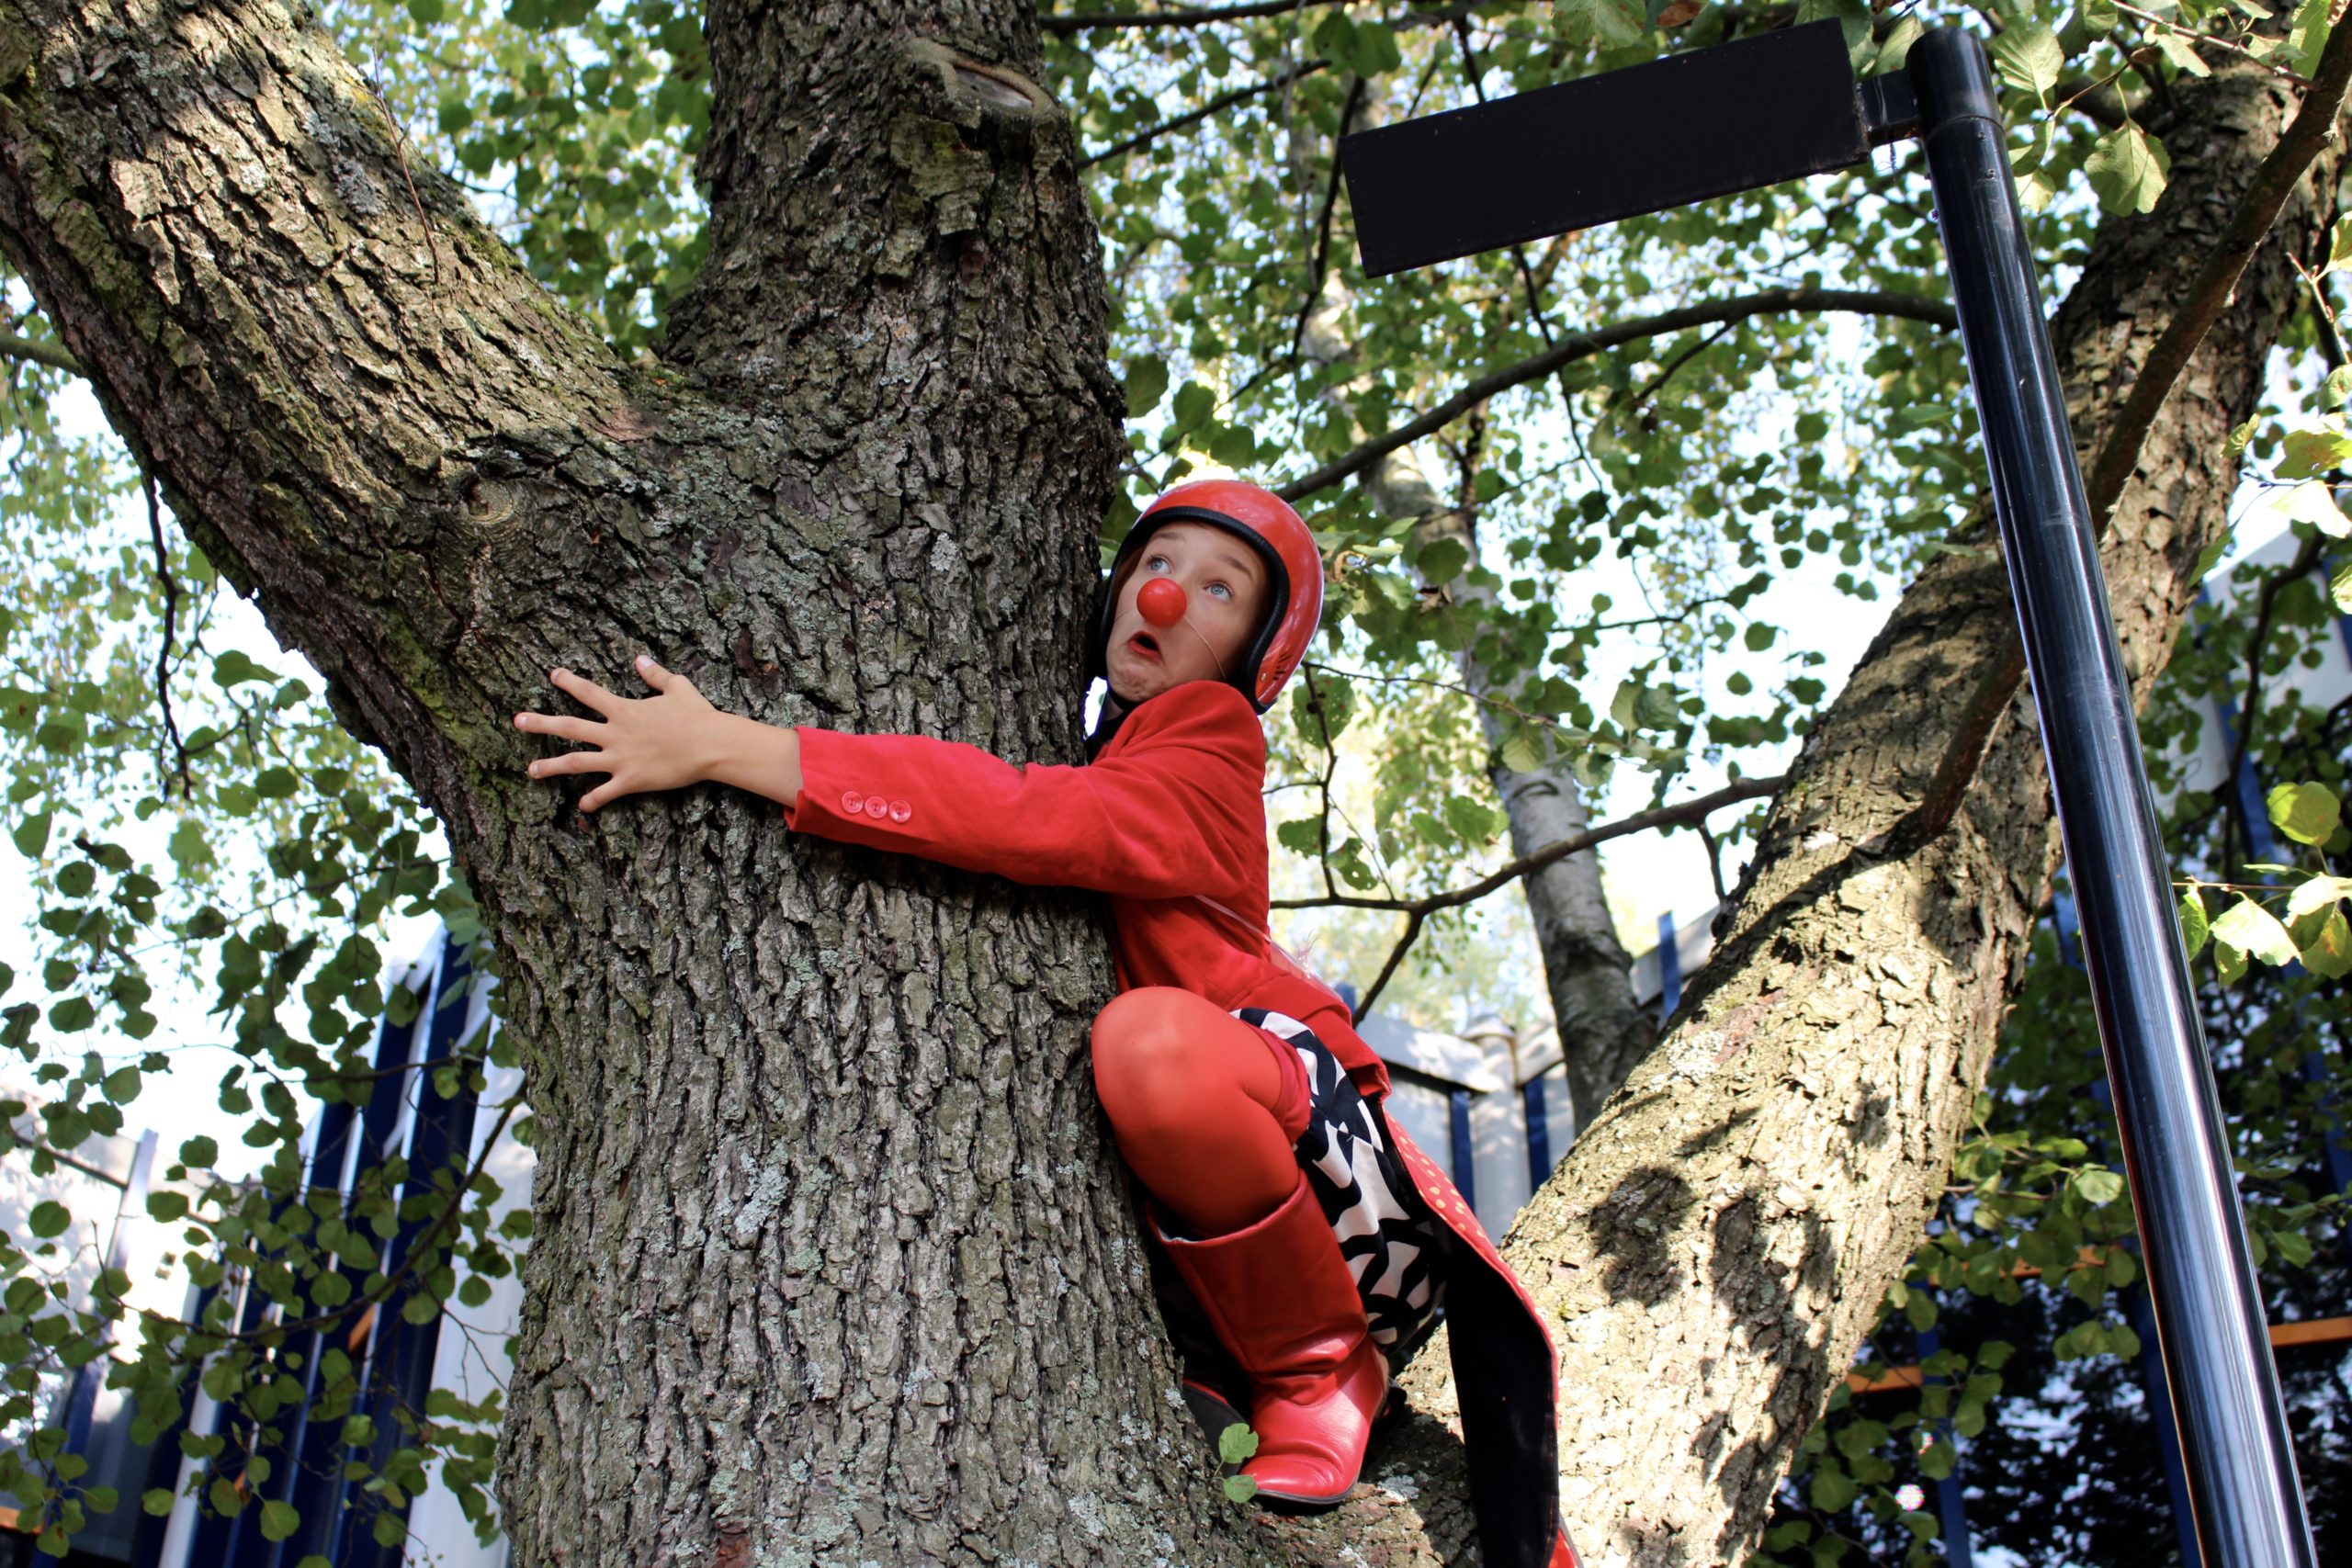 In photo: A clown climbing in a tree